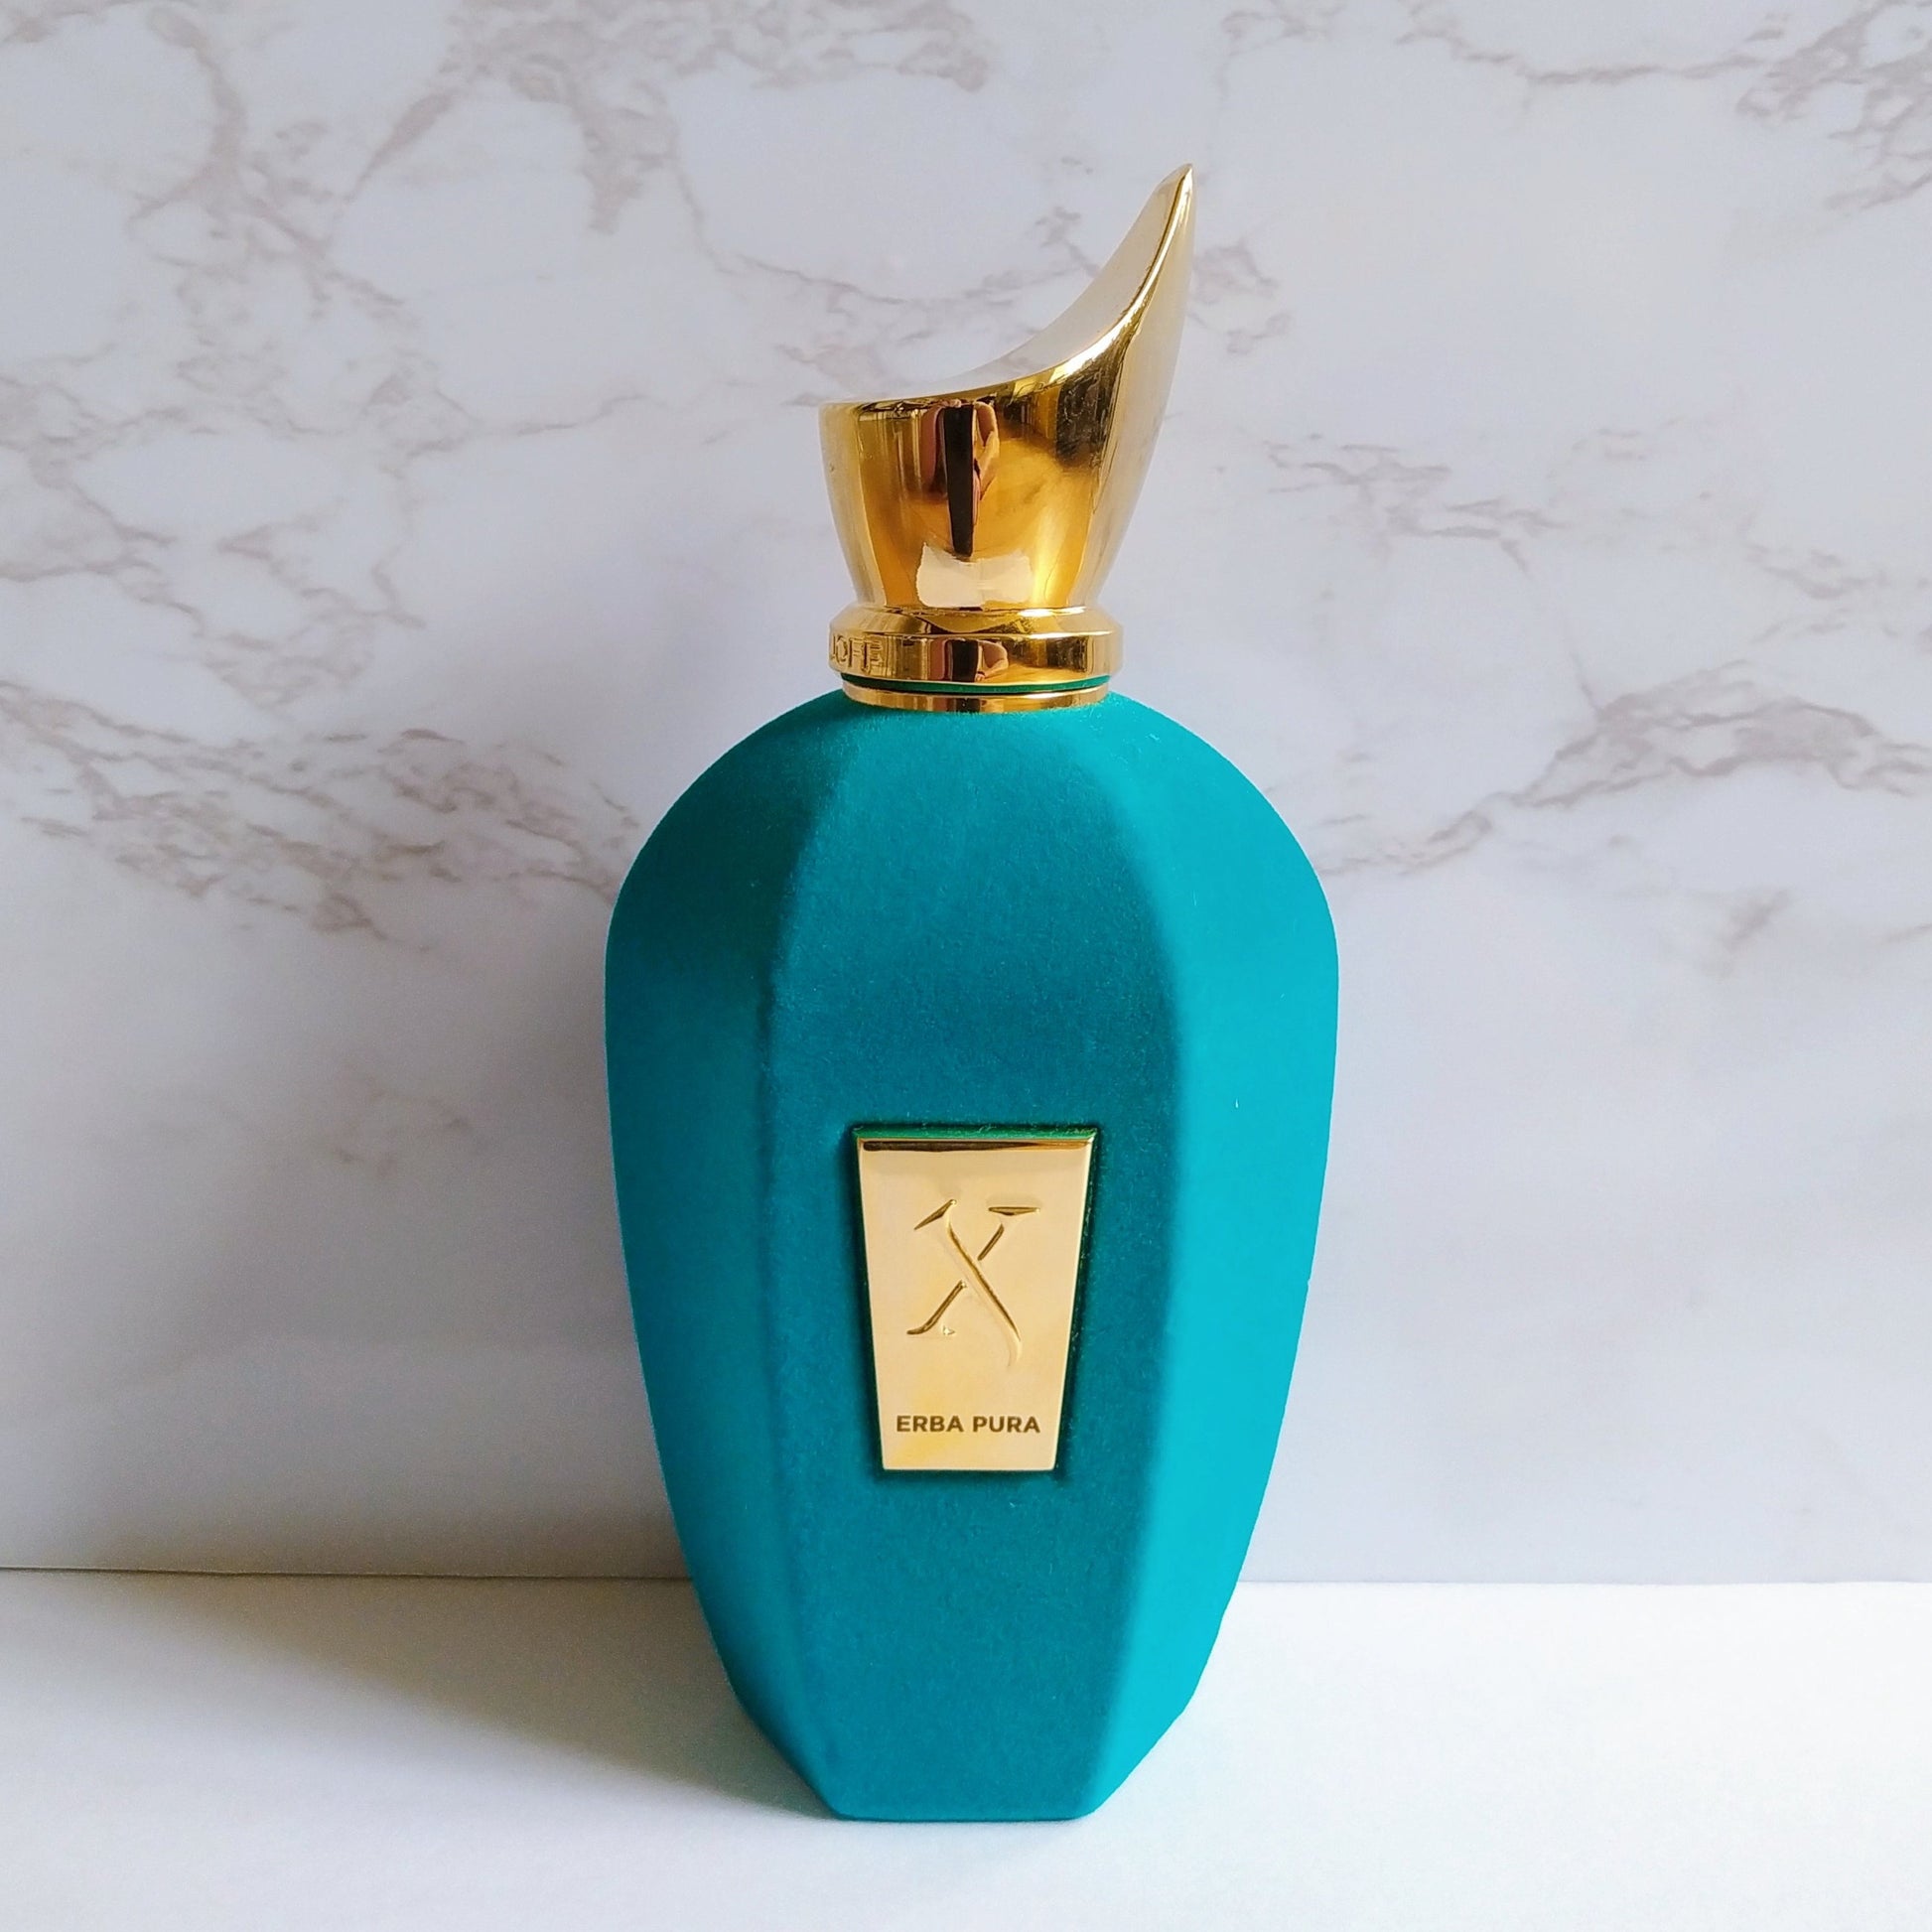 Xerjoff Erba Pura - Fragrance Sample UK – Perfume Muse